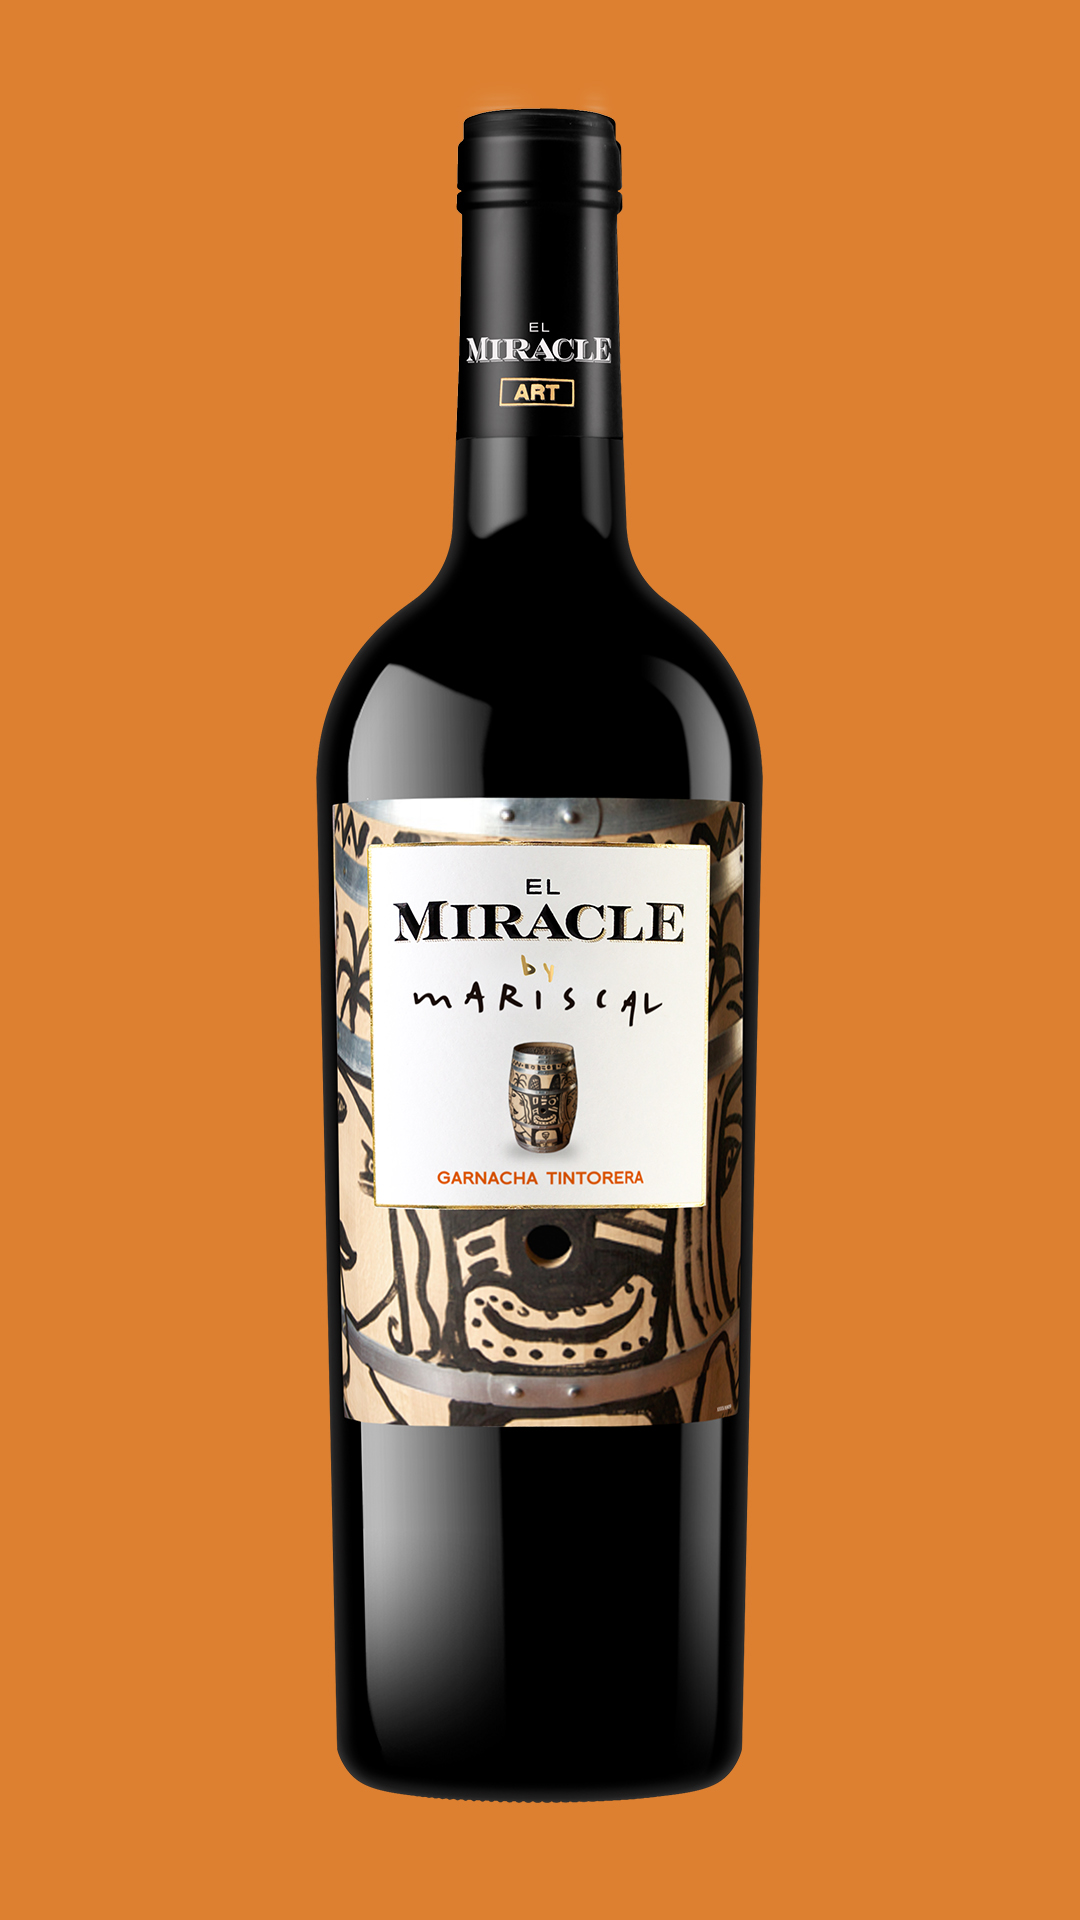 El Miracle by Mariscal